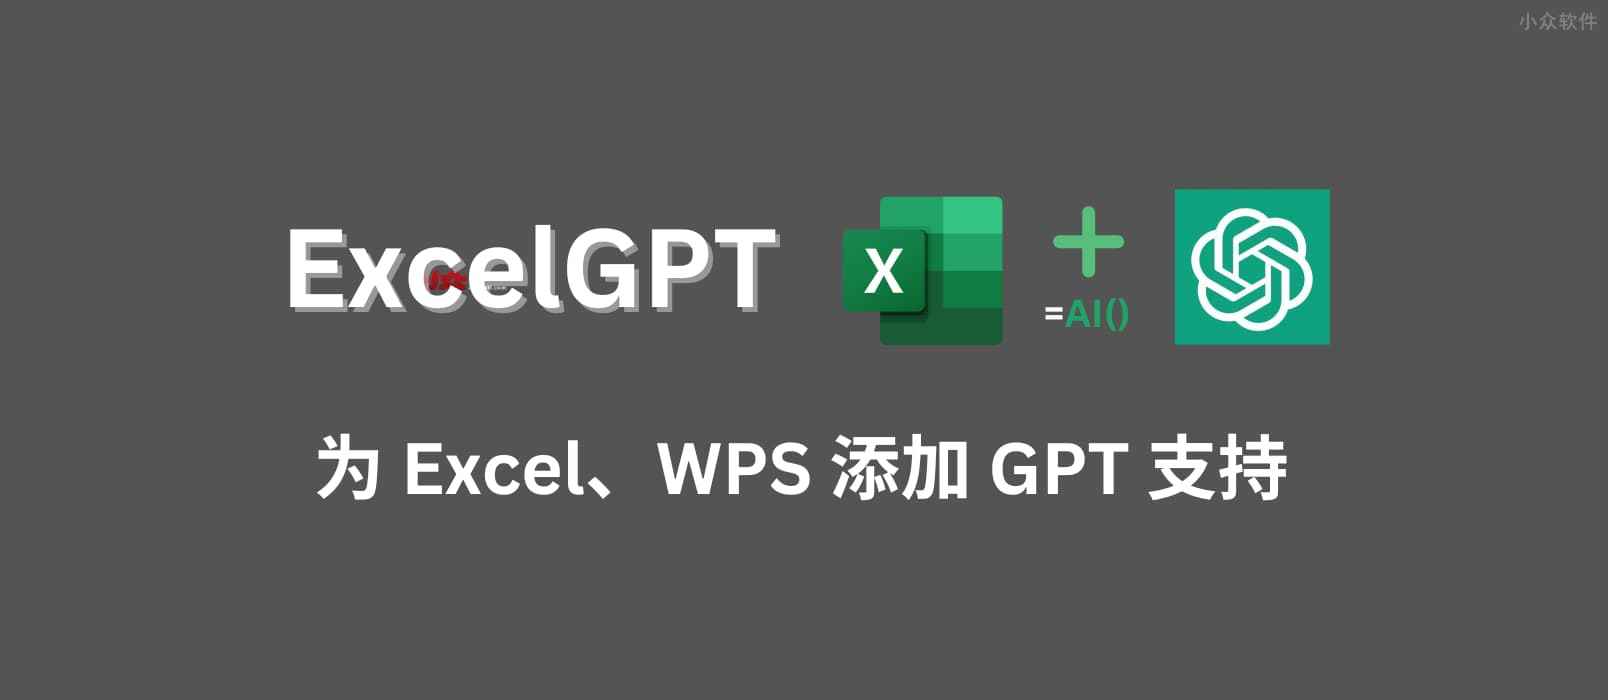 ExcelGPT – 为 Excel、WPS 添加 GPT 支持